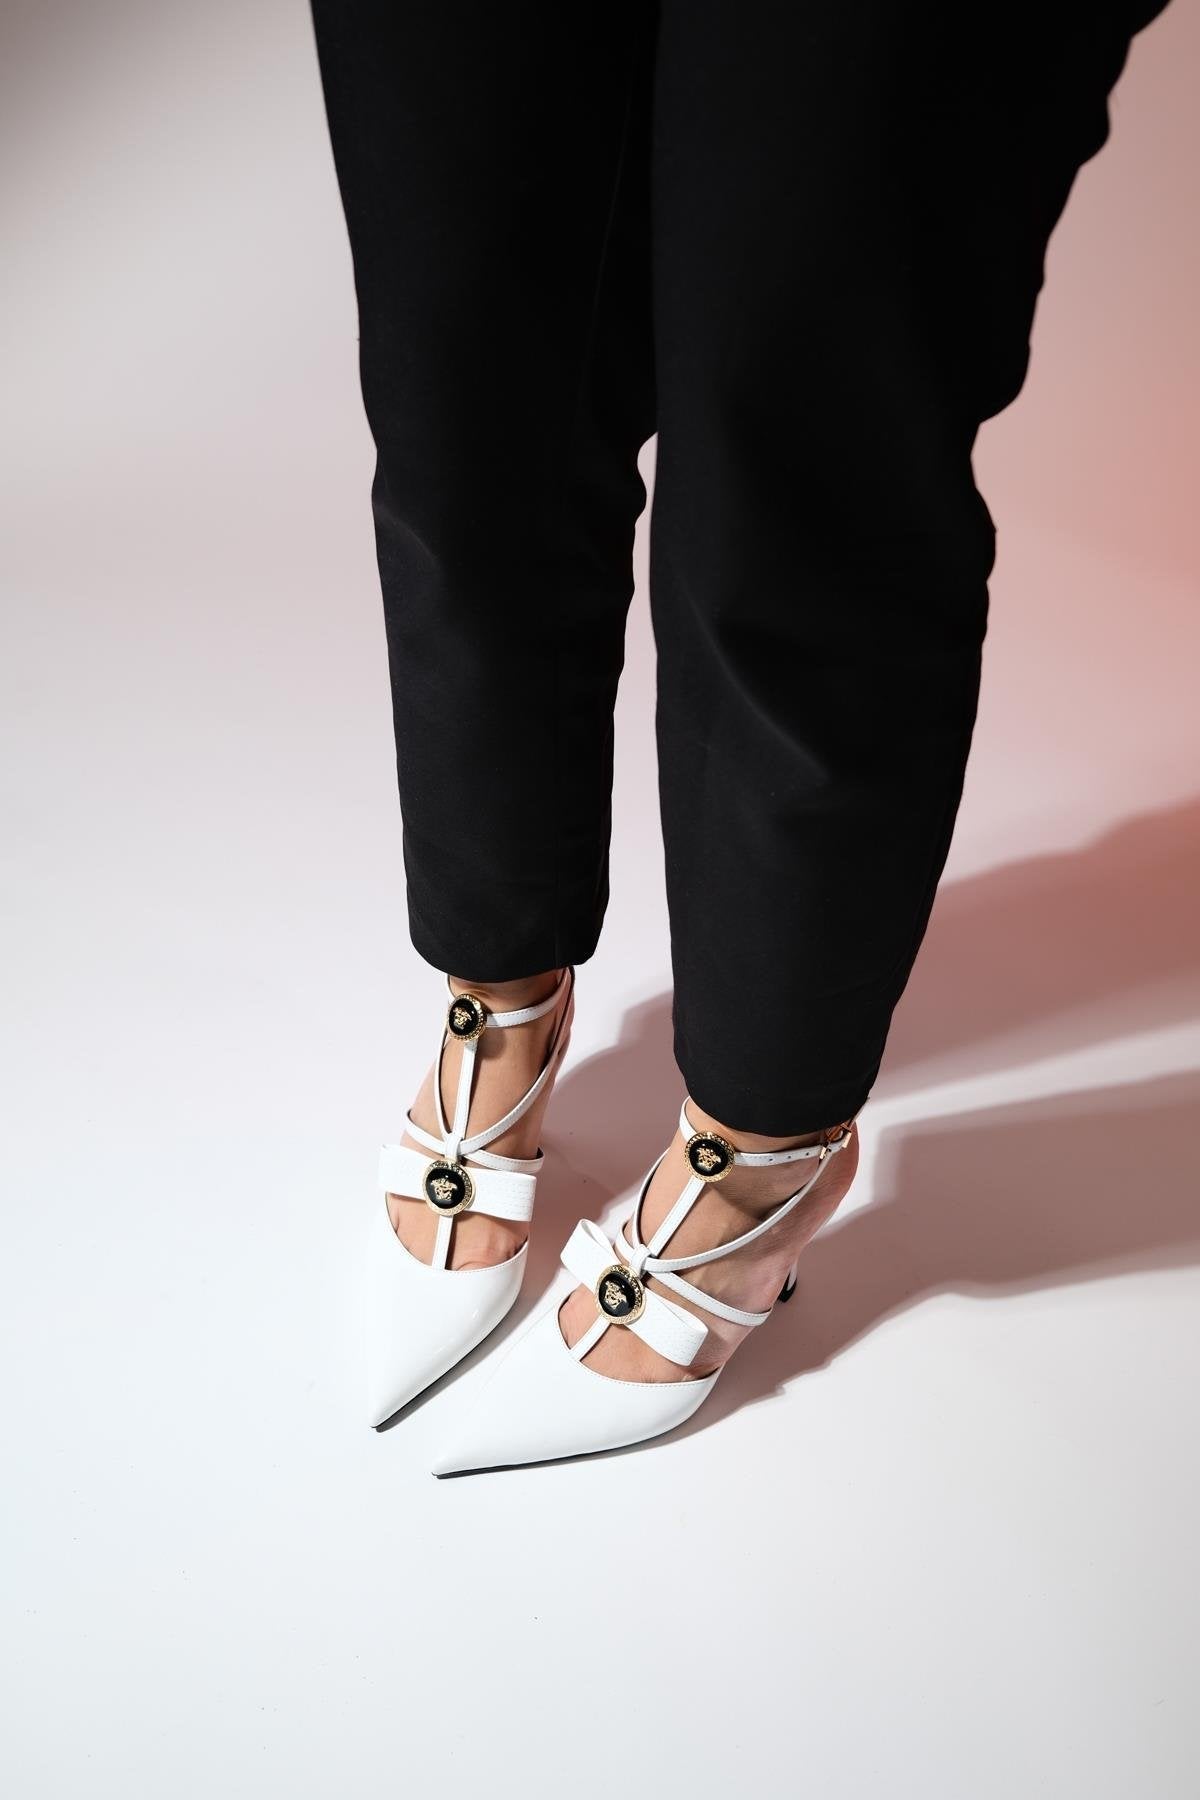 GRADO White Patent Leather Women's Heeled Shoes - Lebbse